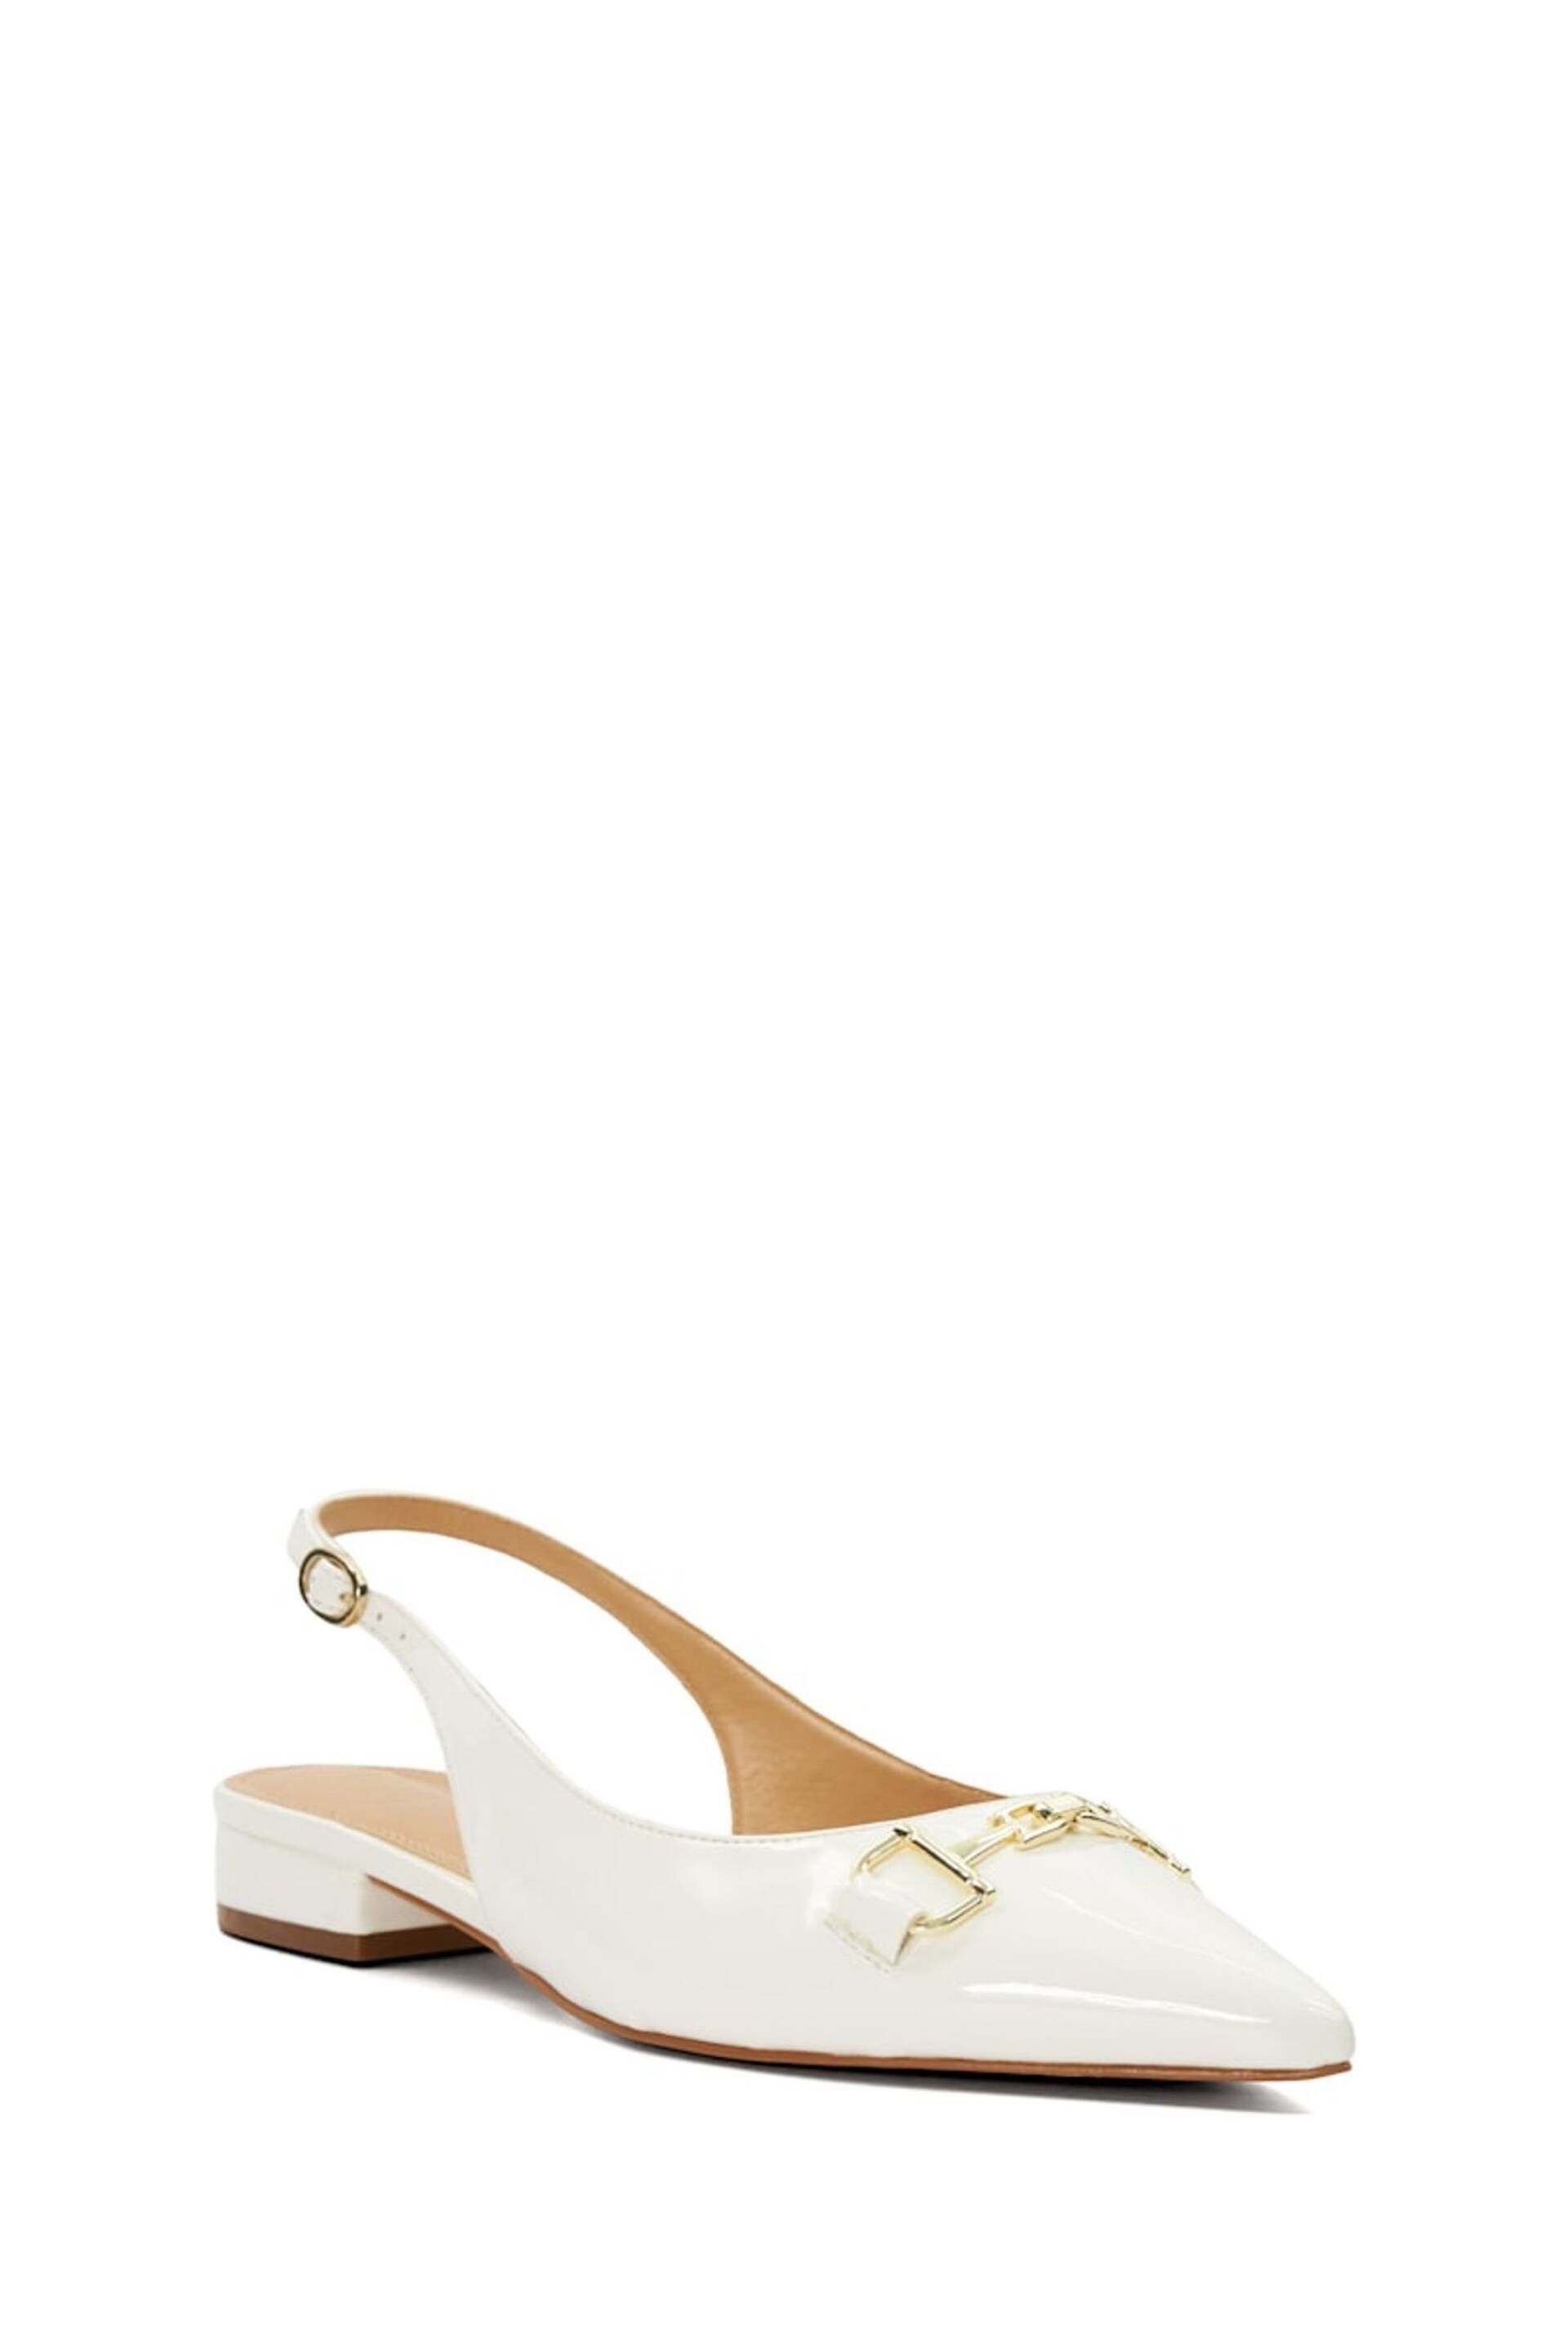 Dune London White Wide Fit Hopeful Branded-Snaffle-Trim Ballet Shoes - Image 4 of 8